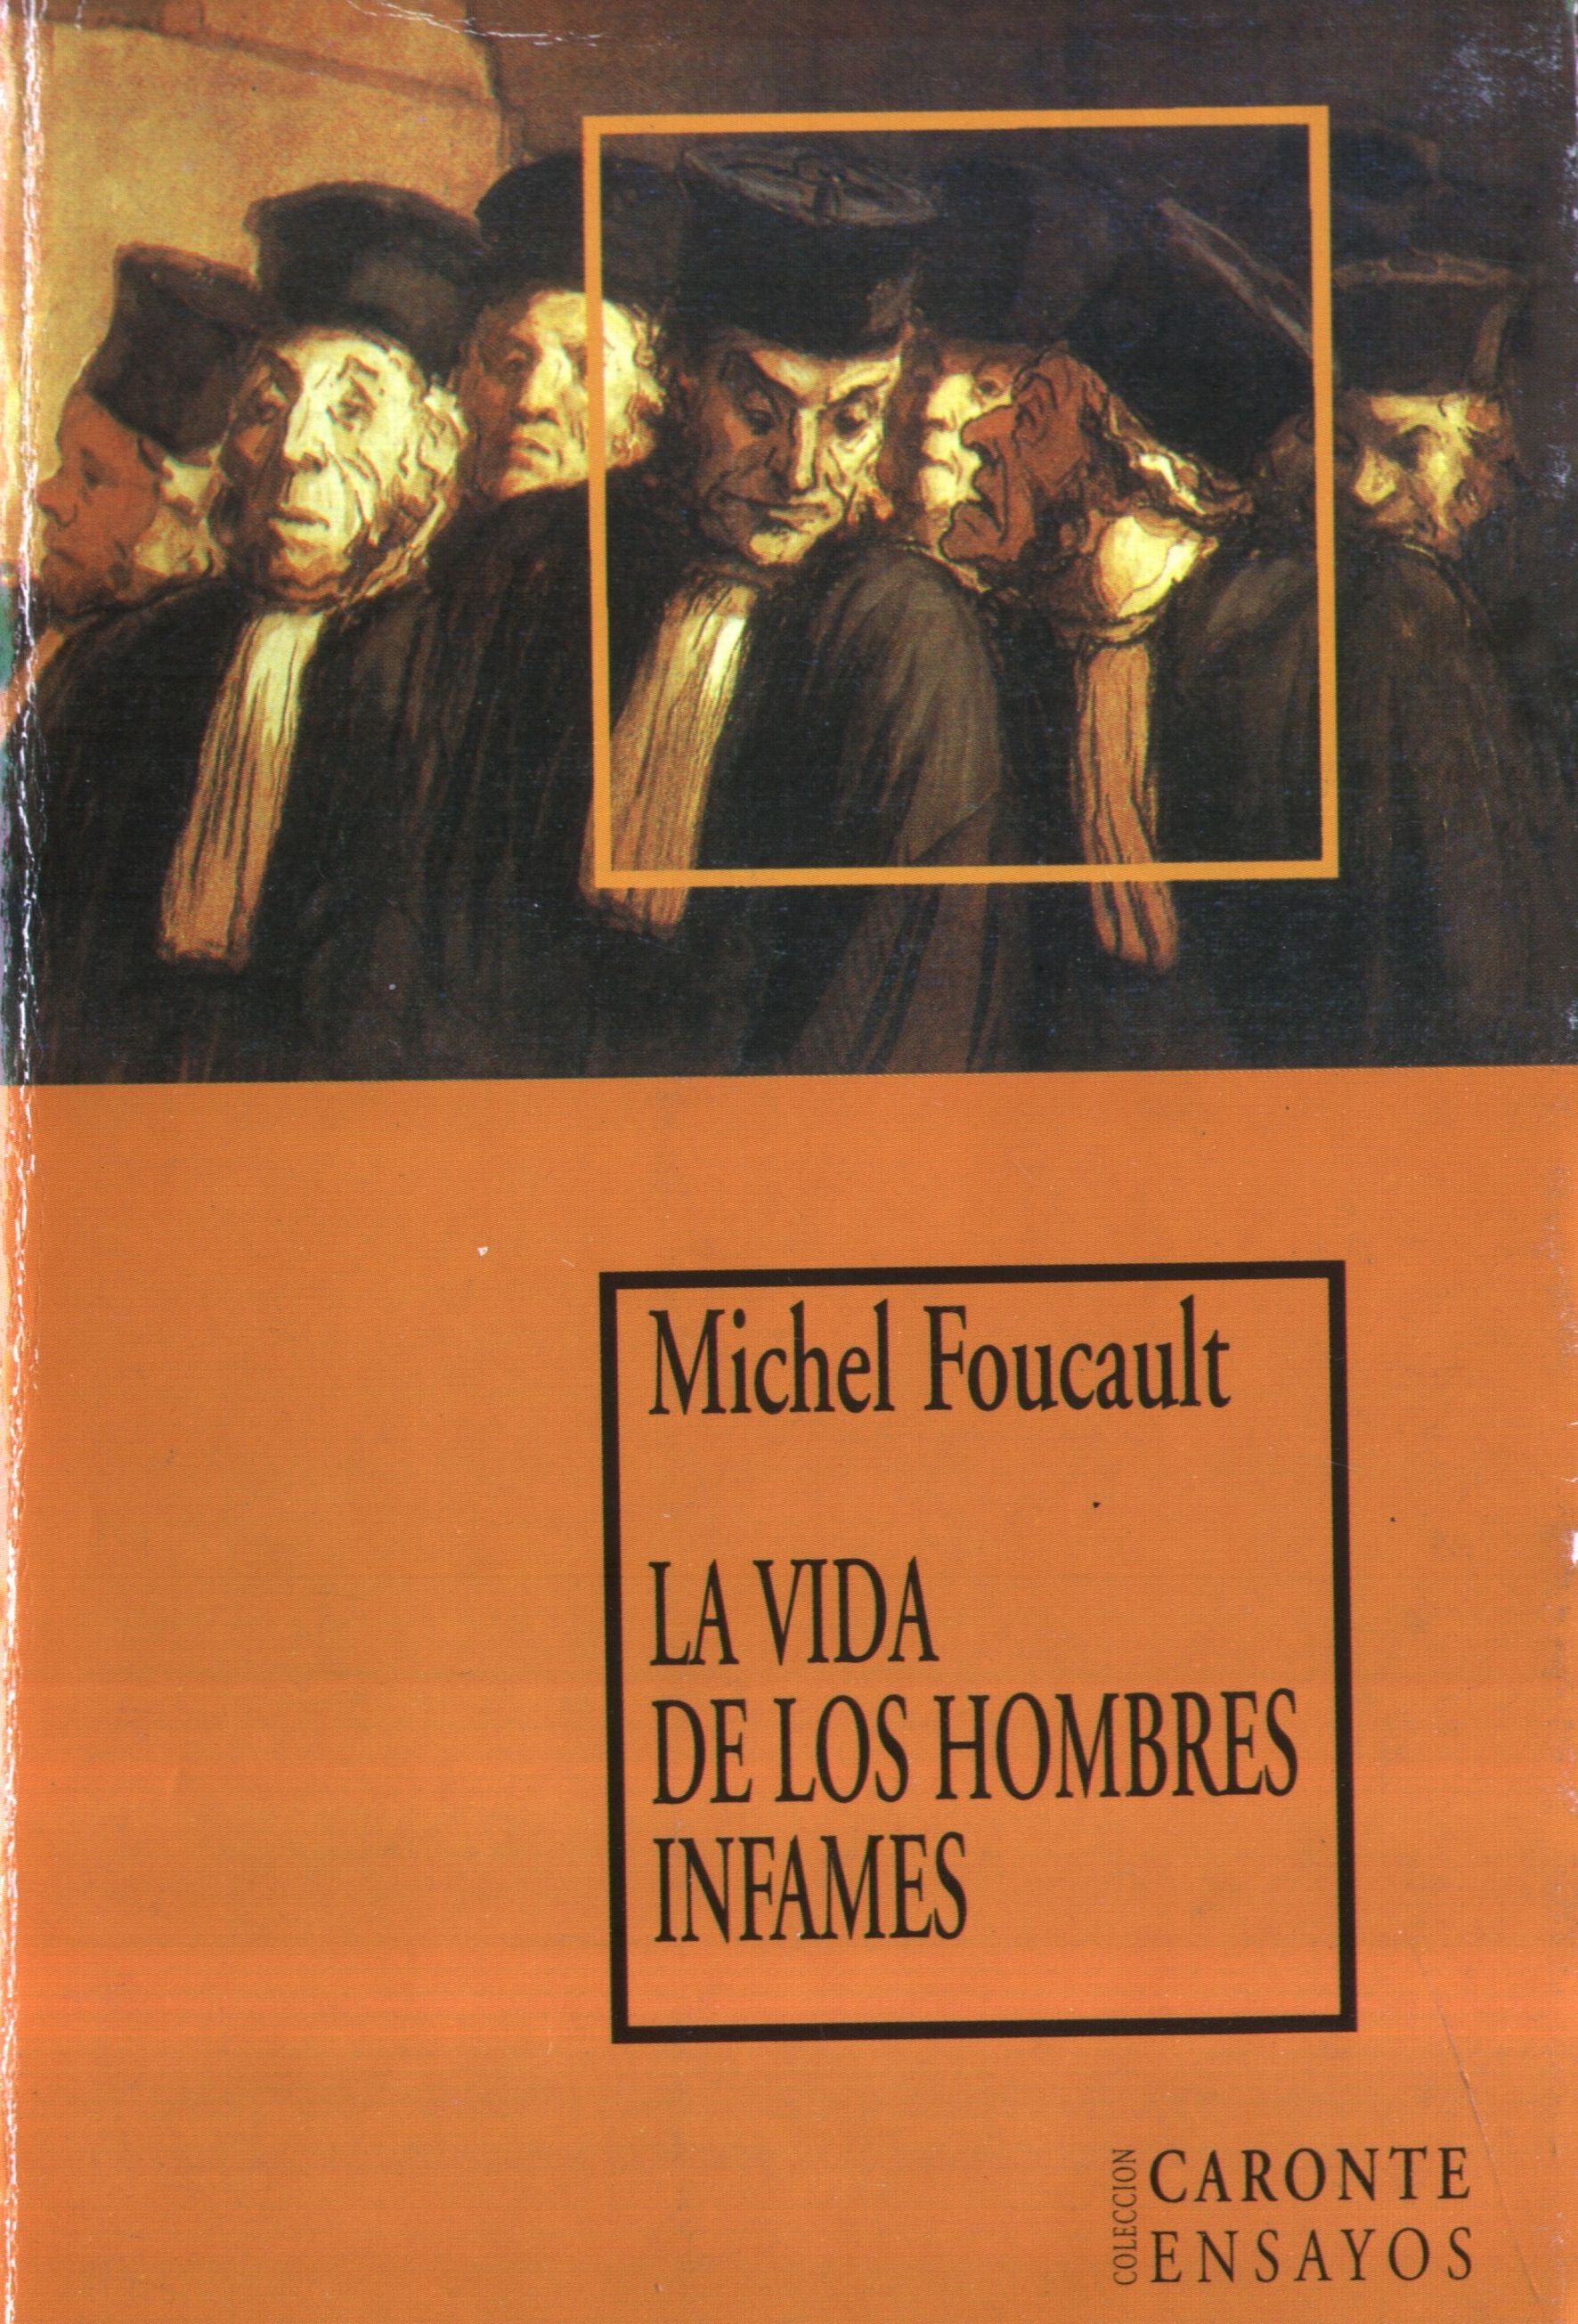 http://tramasintelectuales.files.wordpress.com/2009/06/foucault_hombres_infames.jpg